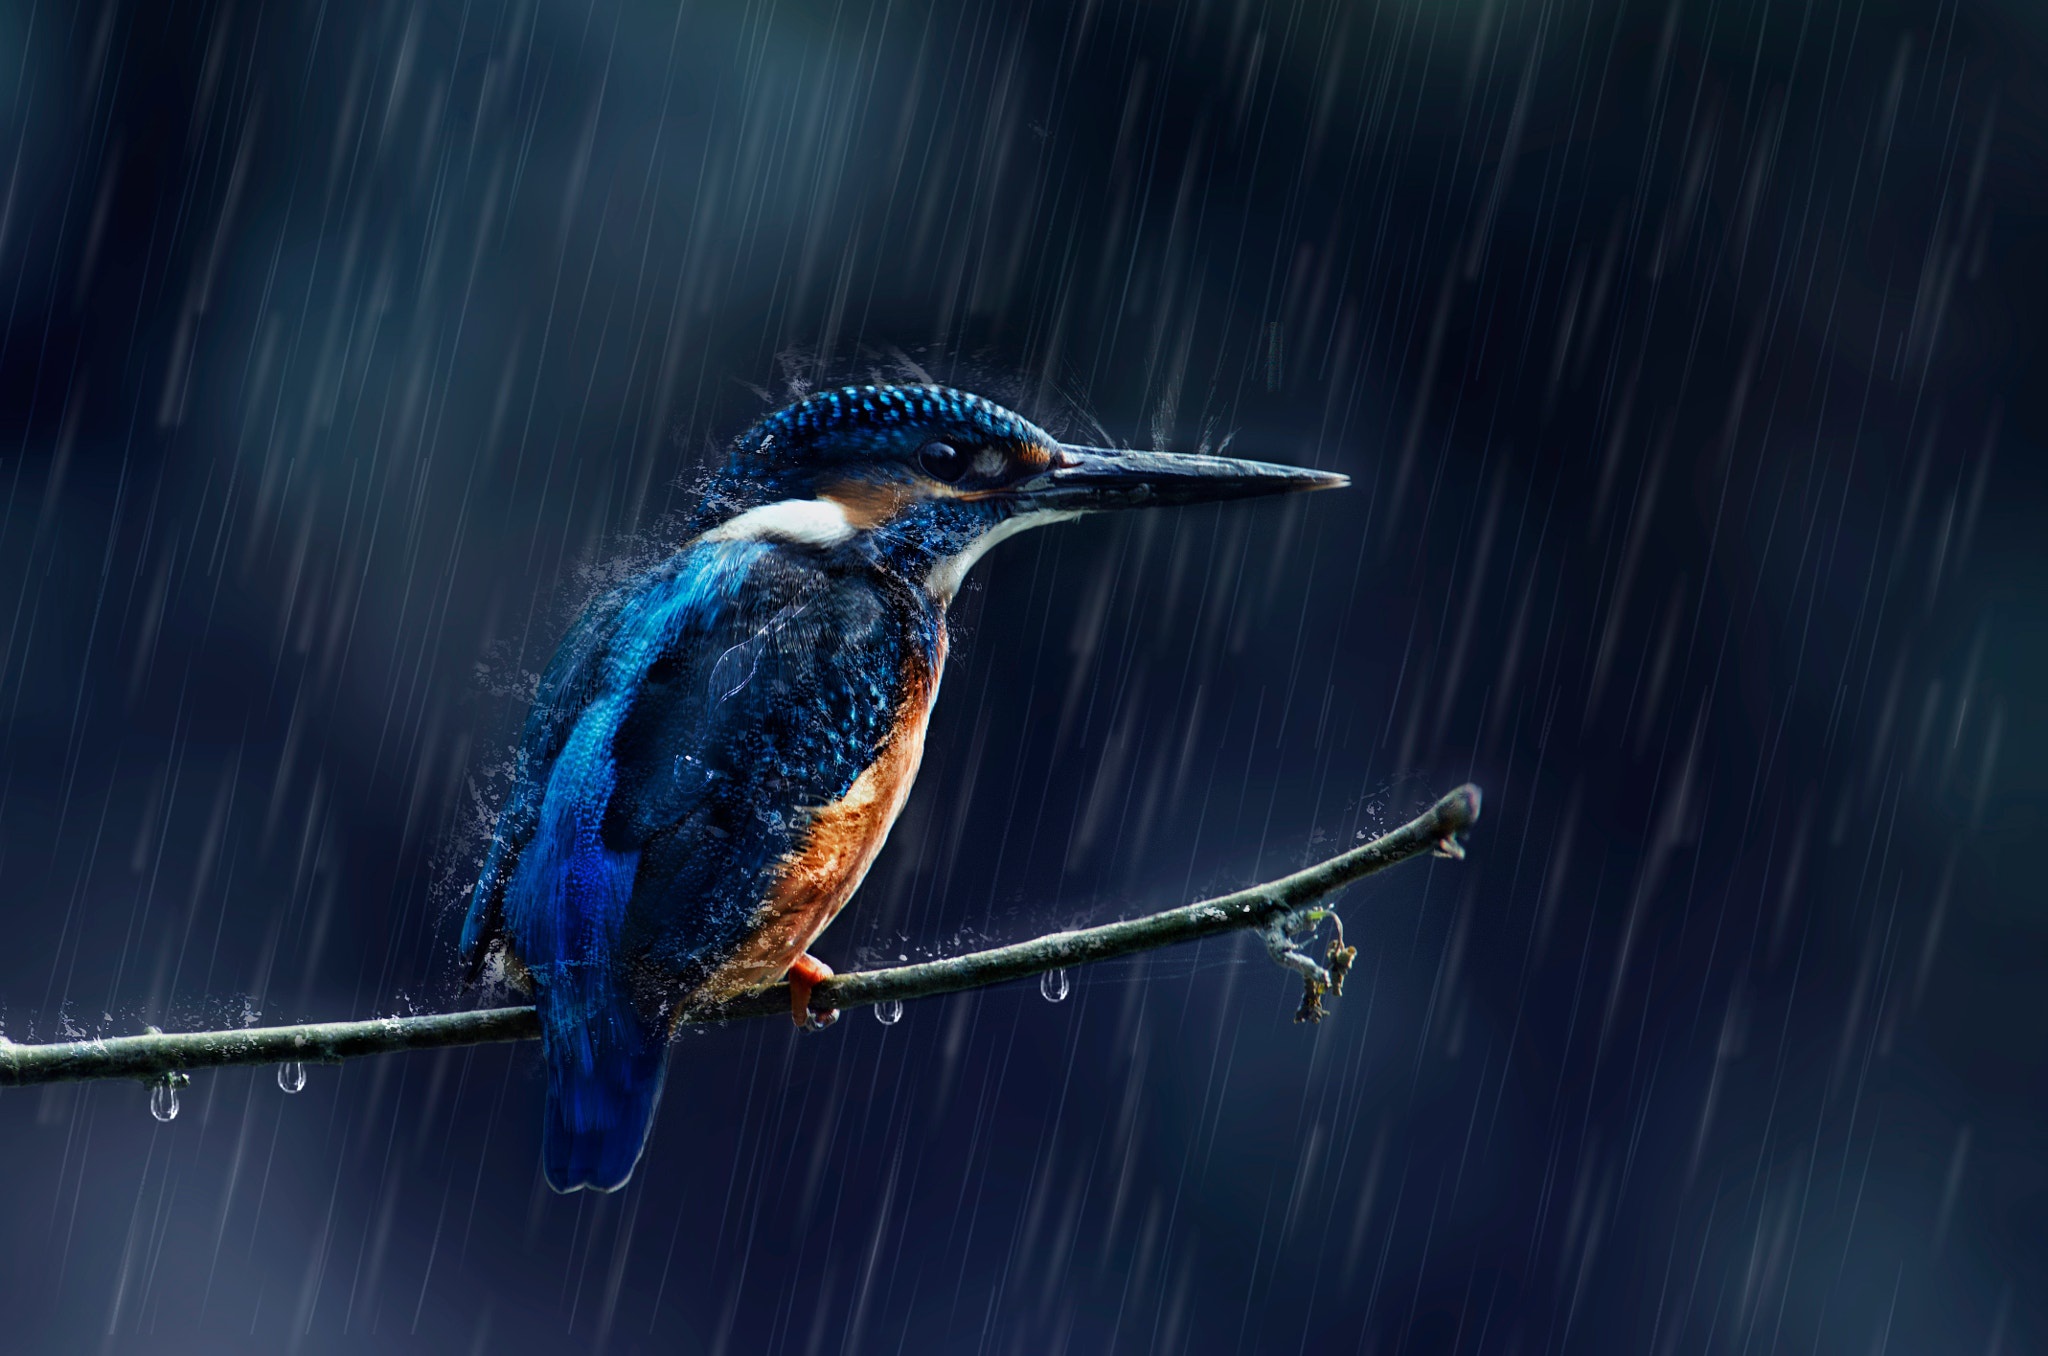 415025 descargar imagen animales, martín pescador, ave, rama, lluvia, aves: fondos de pantalla y protectores de pantalla gratis